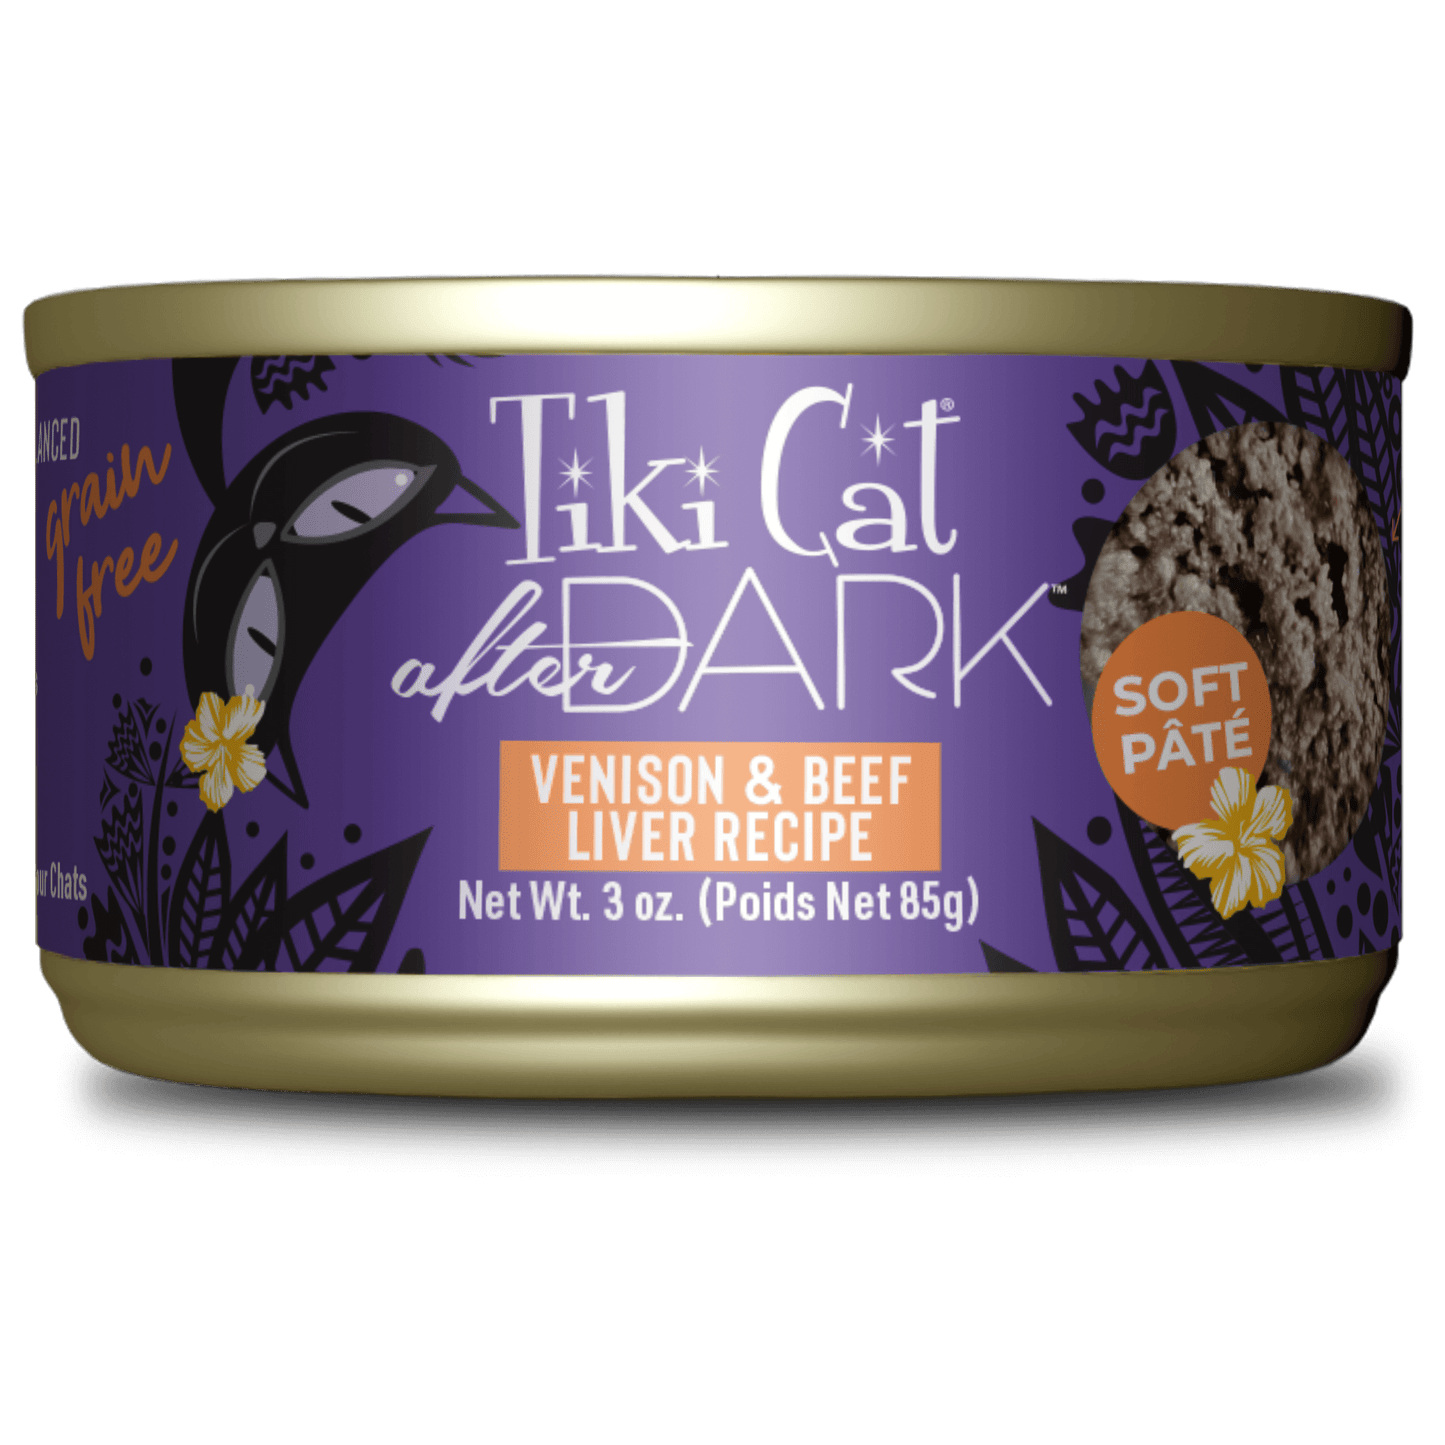 Tiki Cat® After Dark™ Soft Paté Venison & Beef Liver Recipe, 3oz